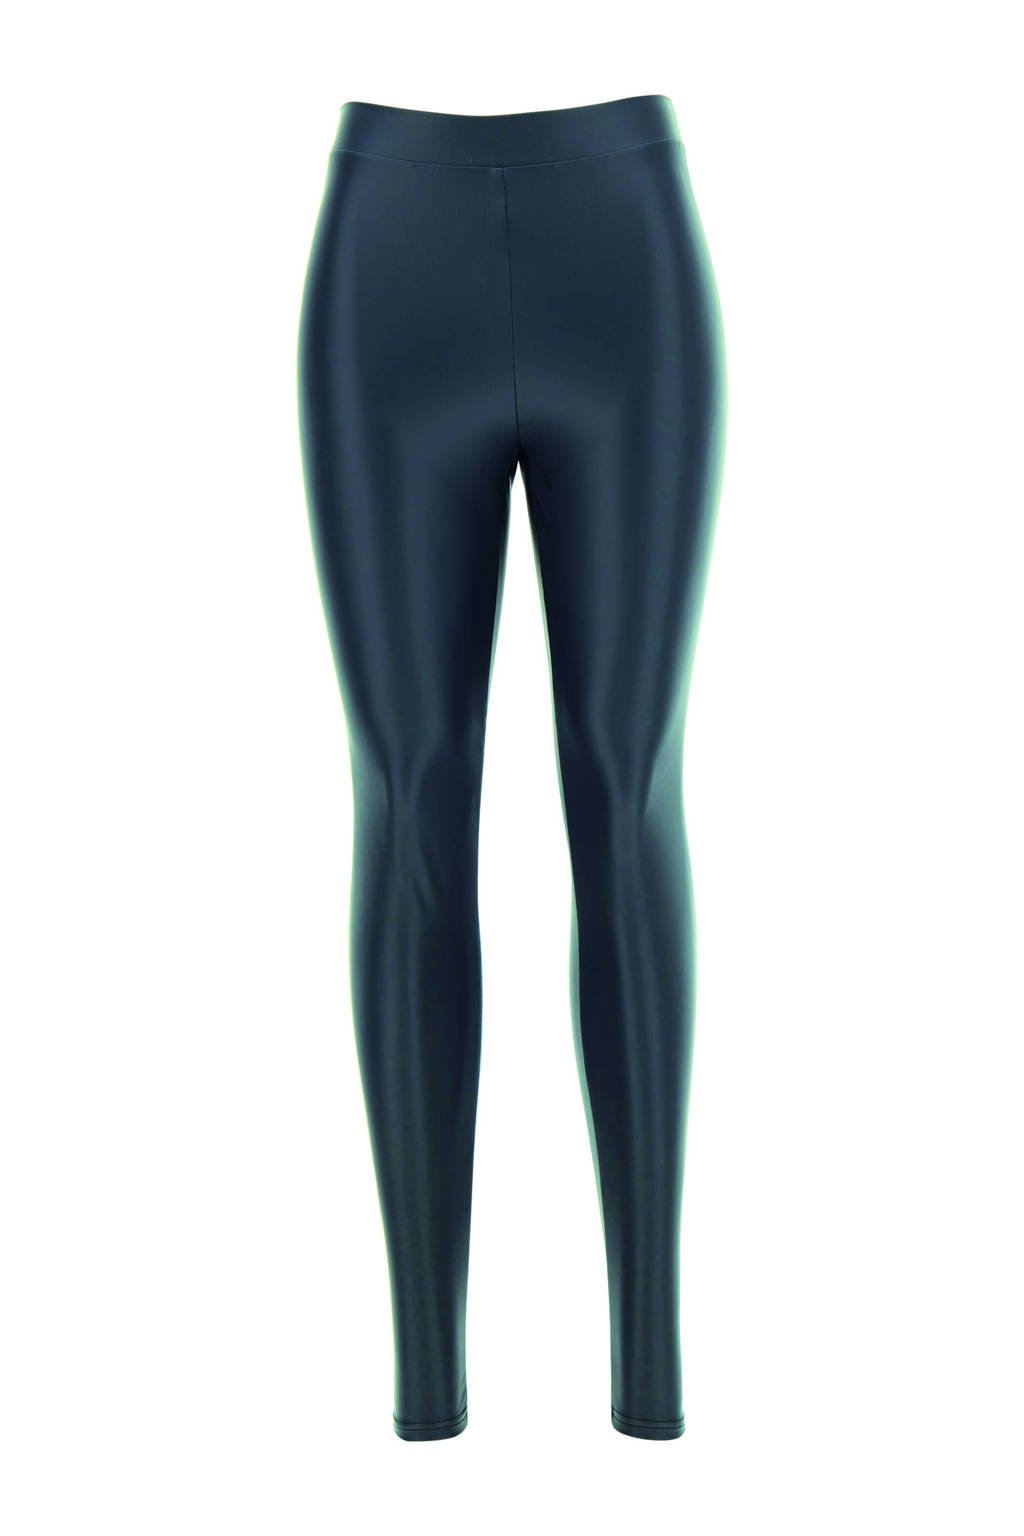 Donkerblauwe dames Oroblu imitatieleren legging van polyester met skinny fit en regular waist